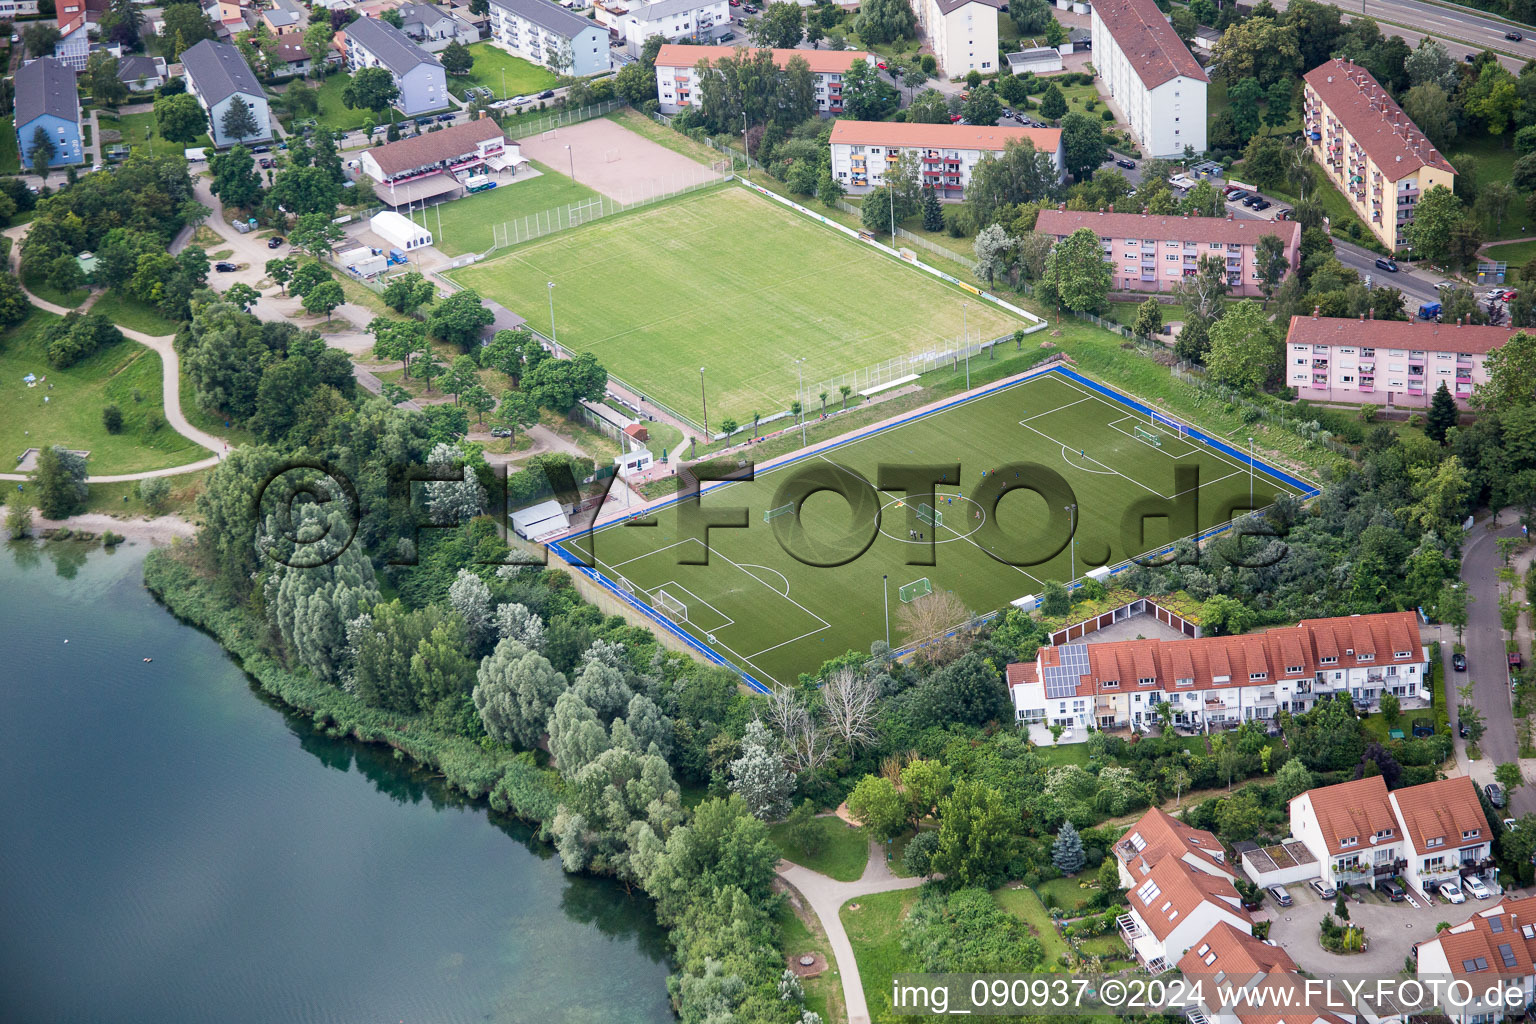 Vue aérienne de Terrain de sport et terrain de football du SV Rot-Weiß au bord du lac Rheinauer See à le quartier Rheinau in Mannheim dans le département Bade-Wurtemberg, Allemagne